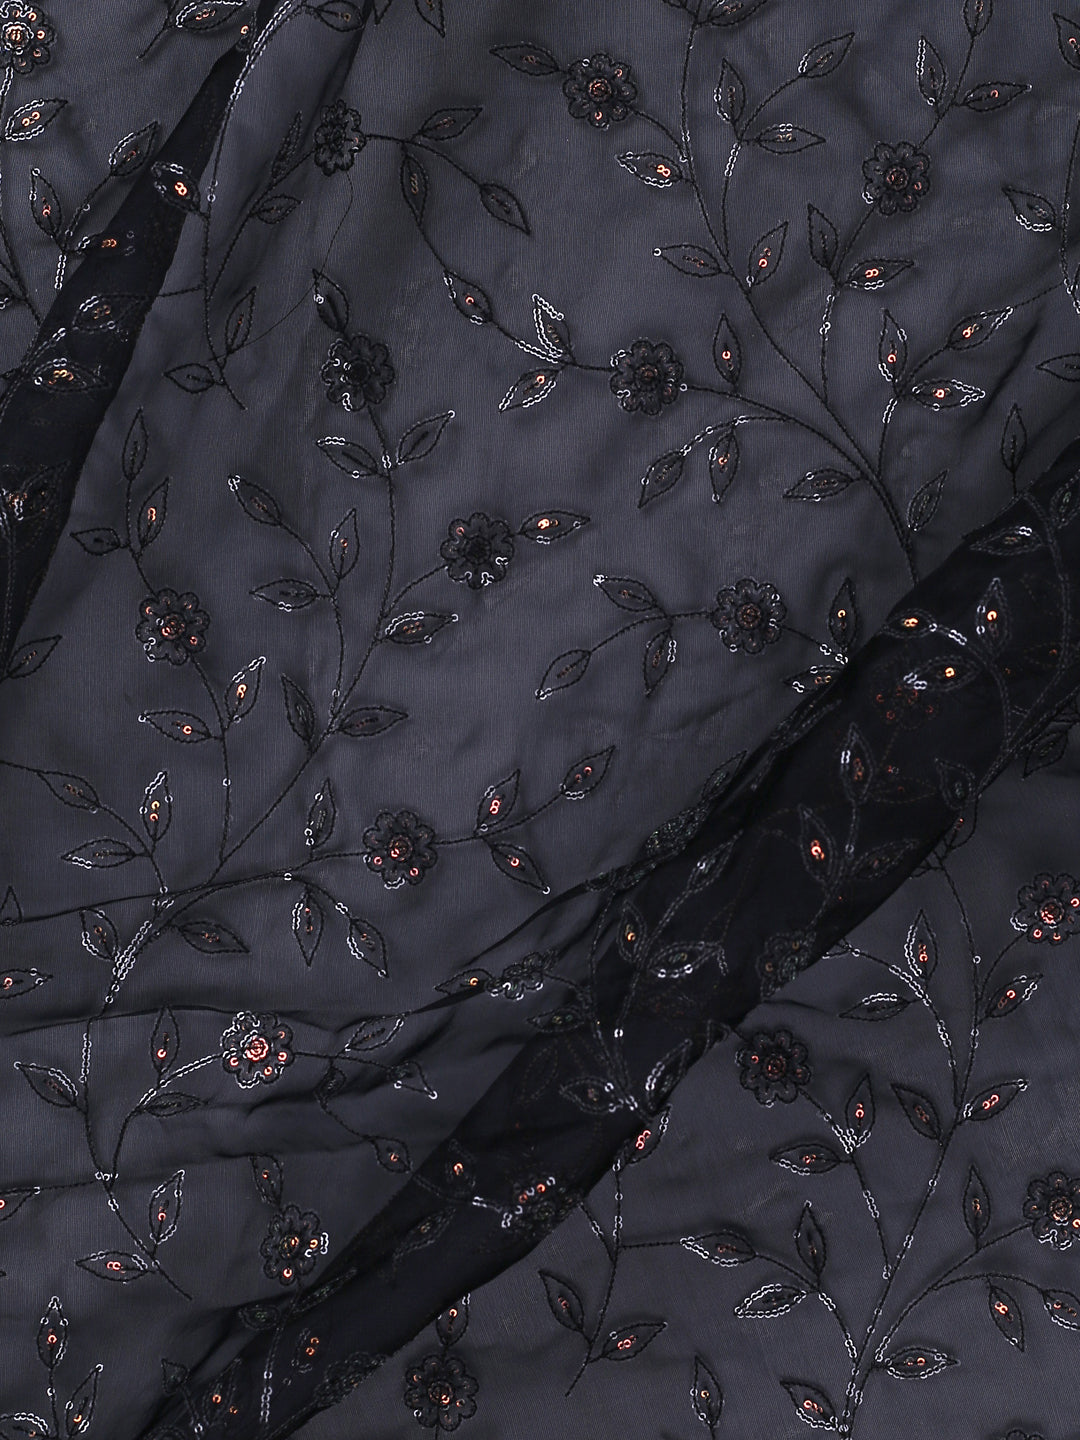 Black Organza Chequered Fabric With Zari Embroidery